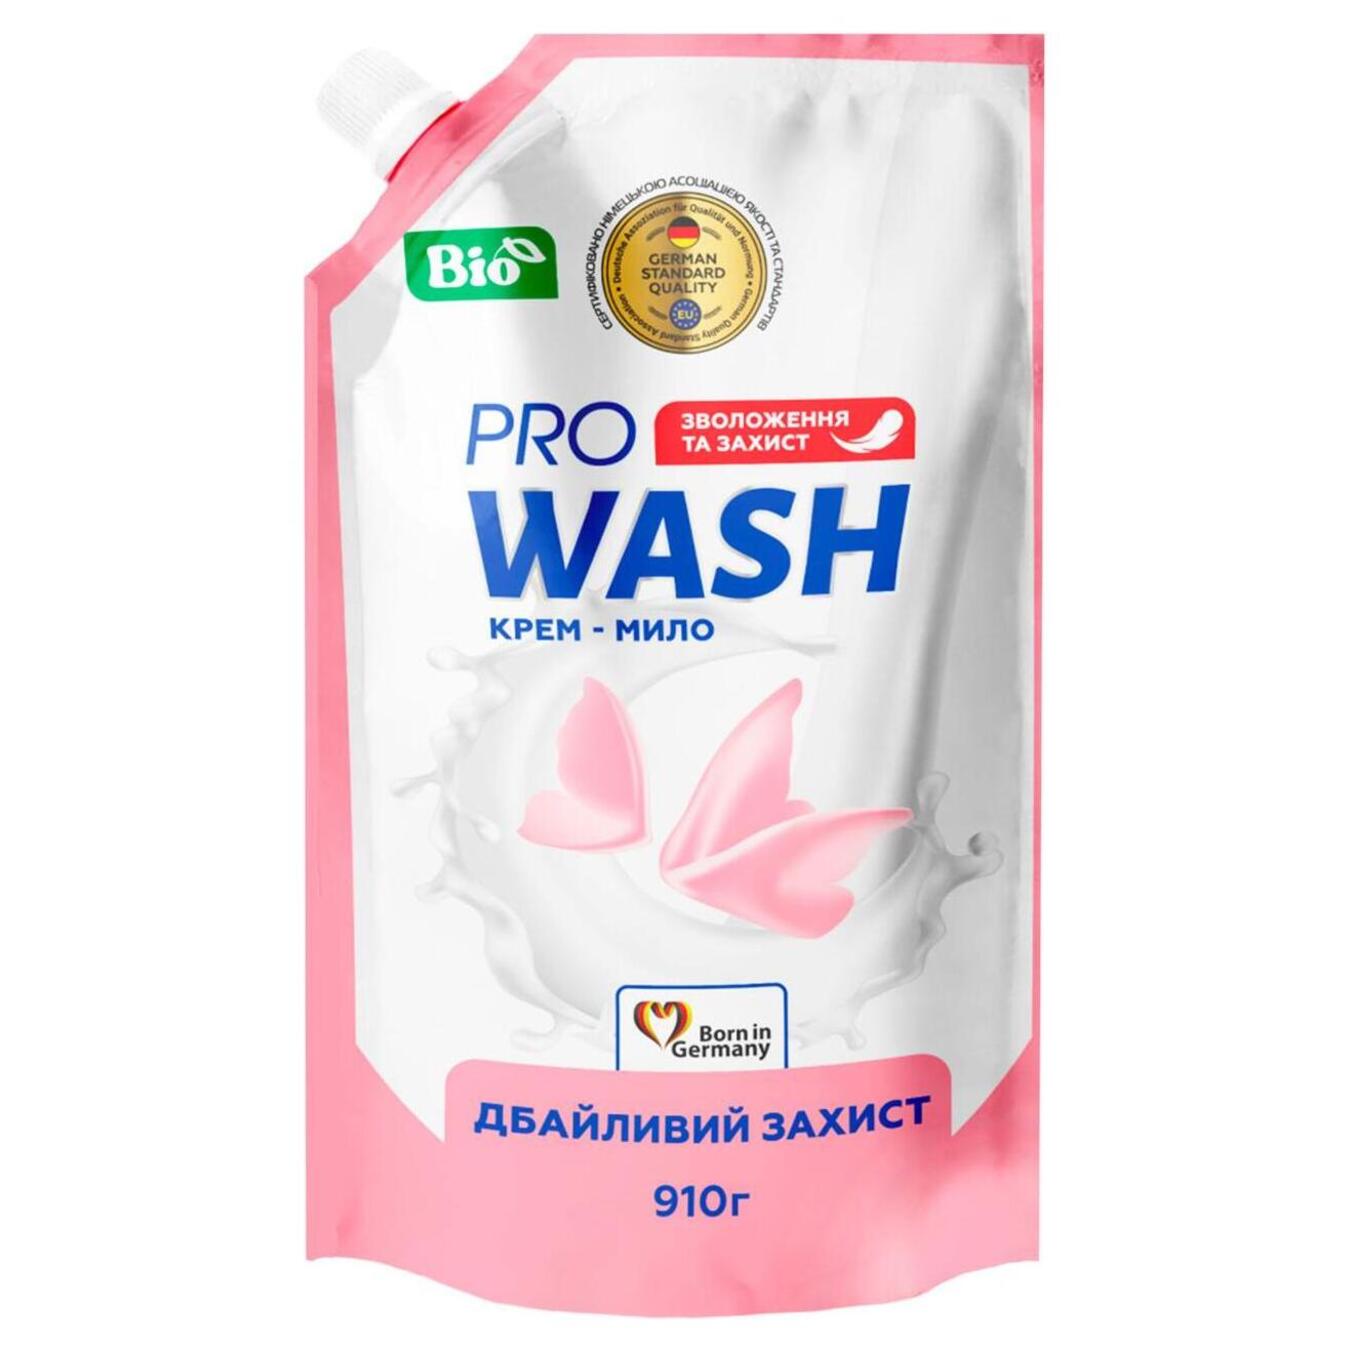 Liquid cream-soap PRO WASH Careful protection doipak 910g